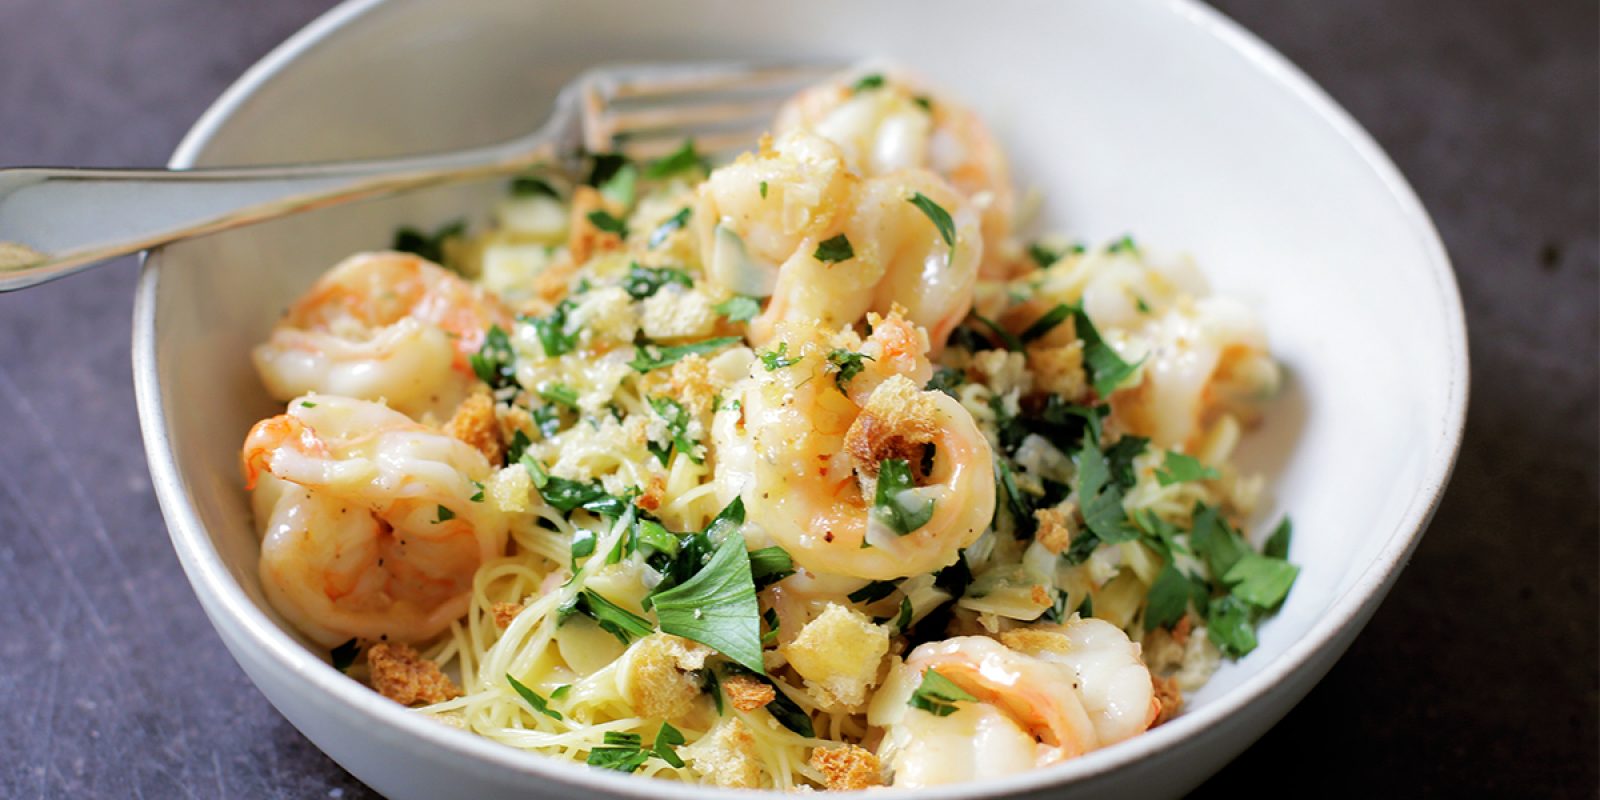 20 HQ Images Shrimp And Angel Hair Pasta Recipe : Easy Shrimp Scampi A Classic Italian American Recipe Over Pasta